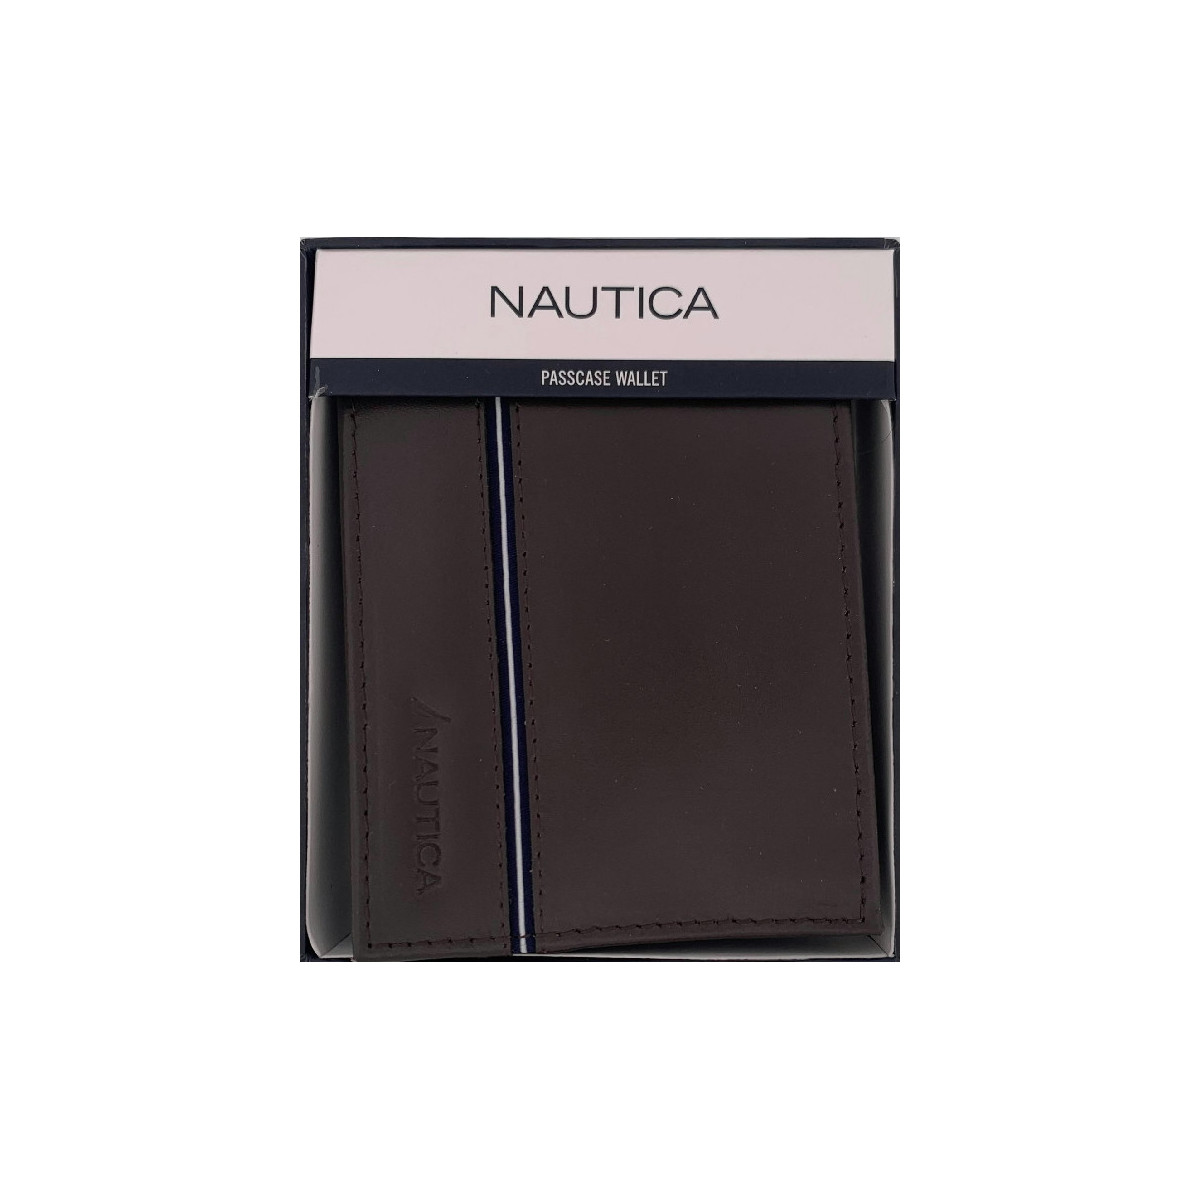 Billetera Nautica Color Cafe Oscura - 31NP220029